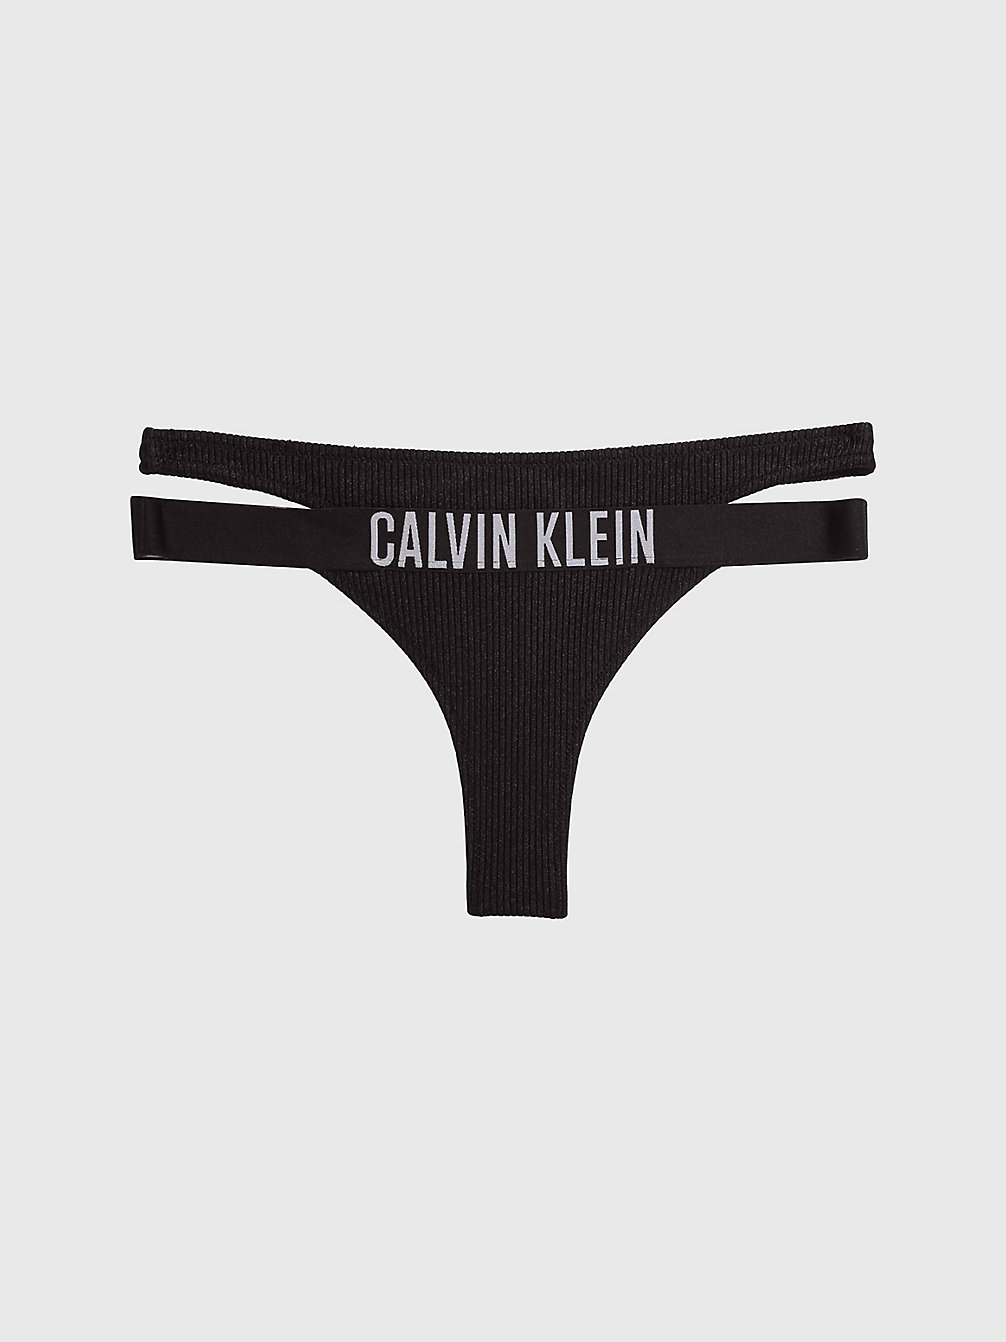 Bas De Bikini String - Intense Power > PVH BLACK > undefined femmes > Calvin Klein